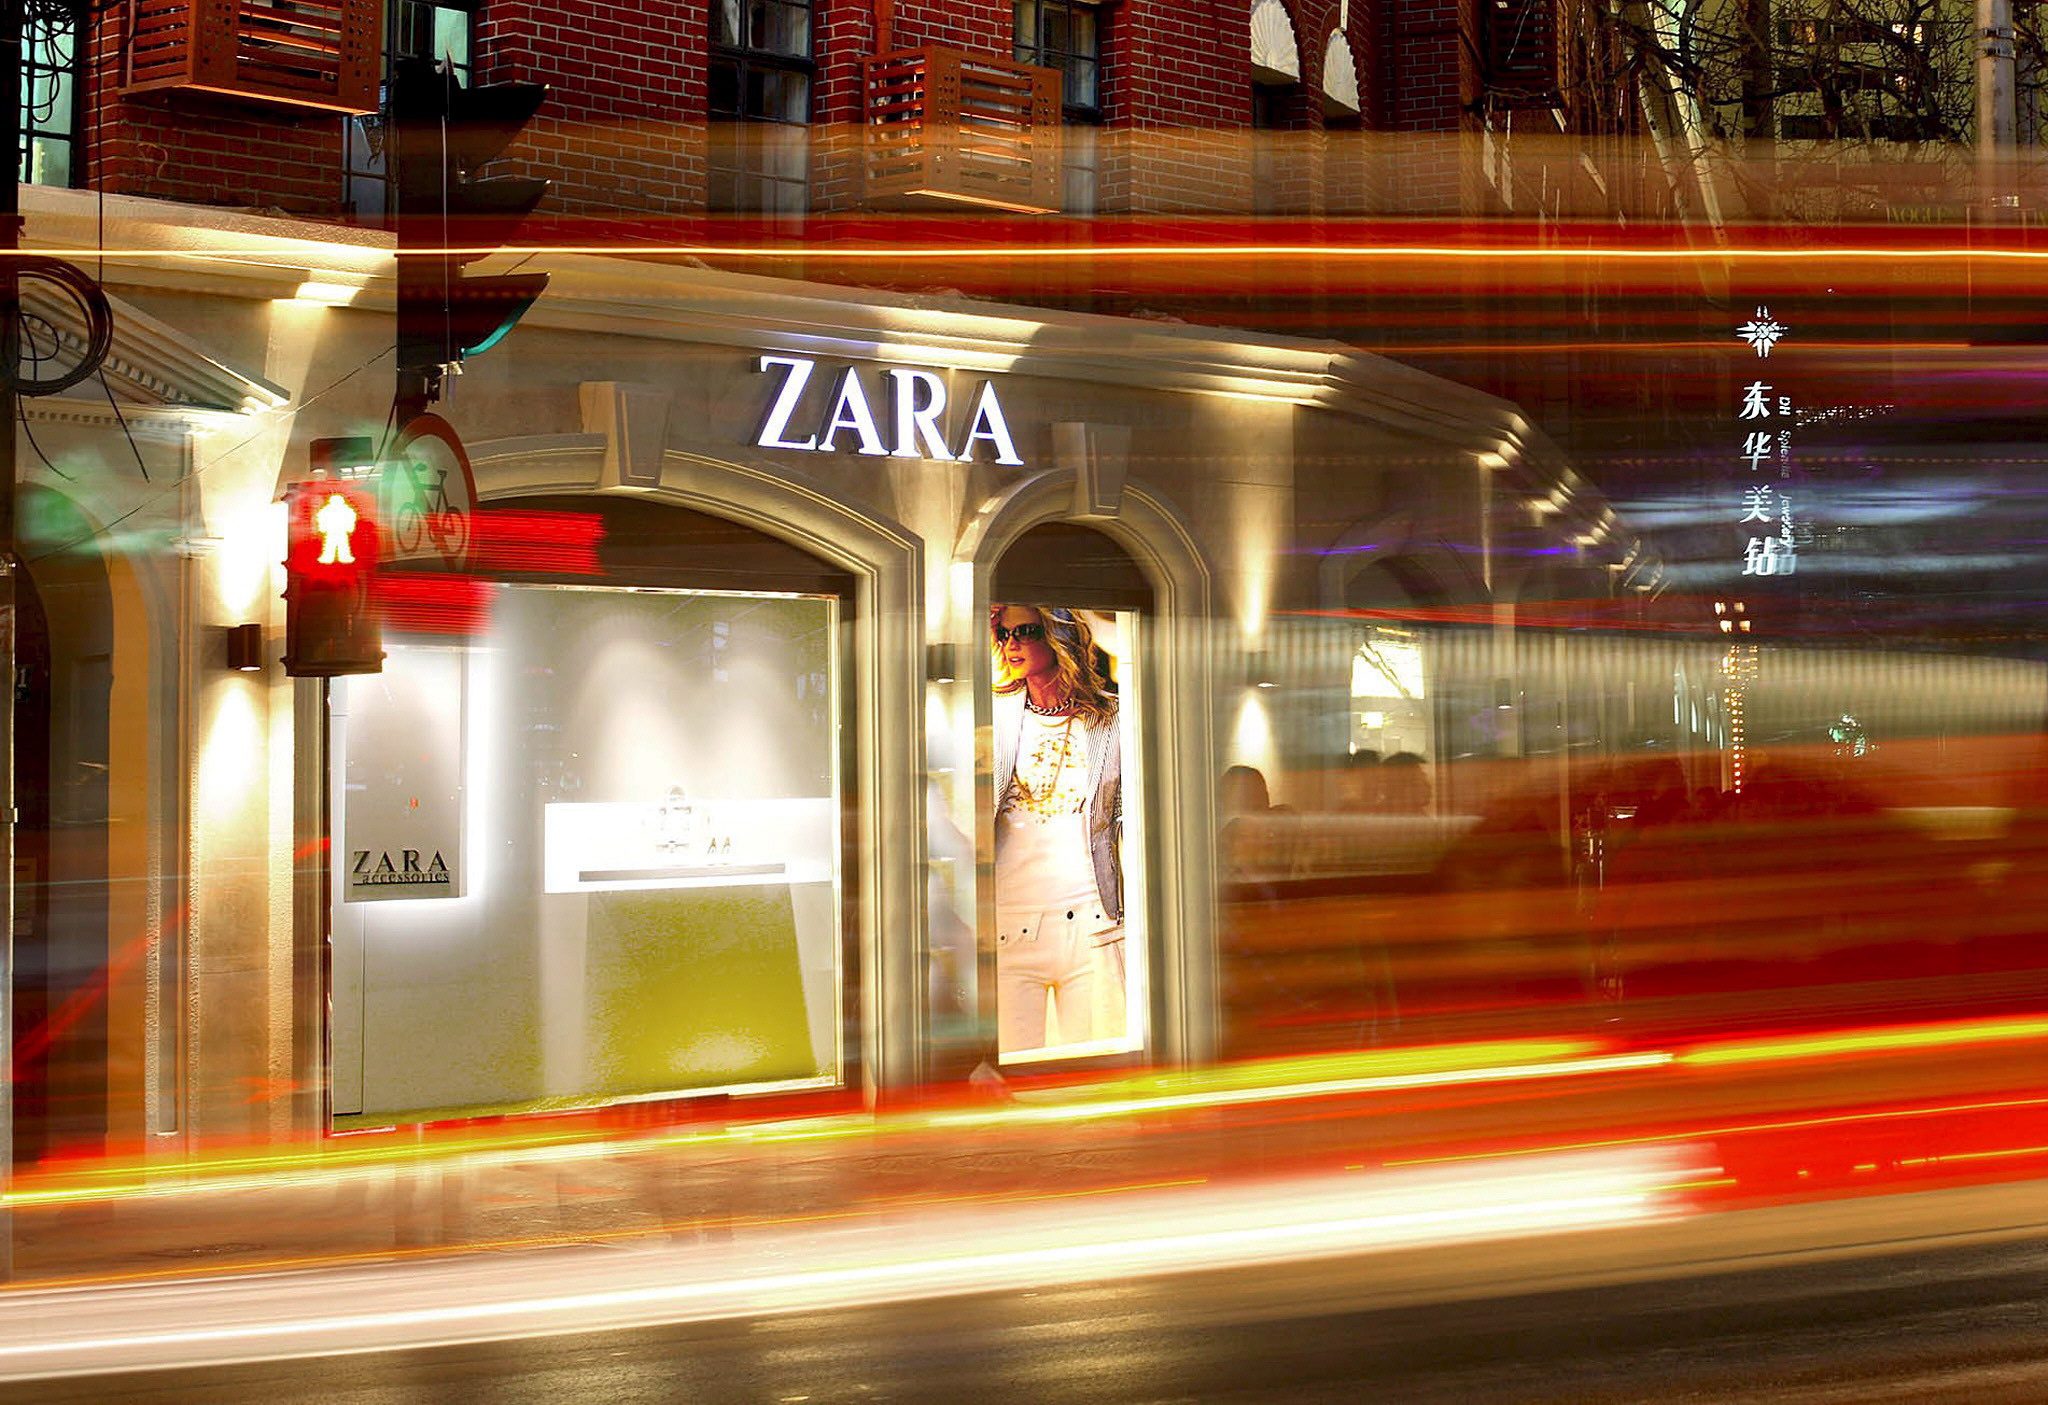 Zara owner Inditex’s profits beat expectations